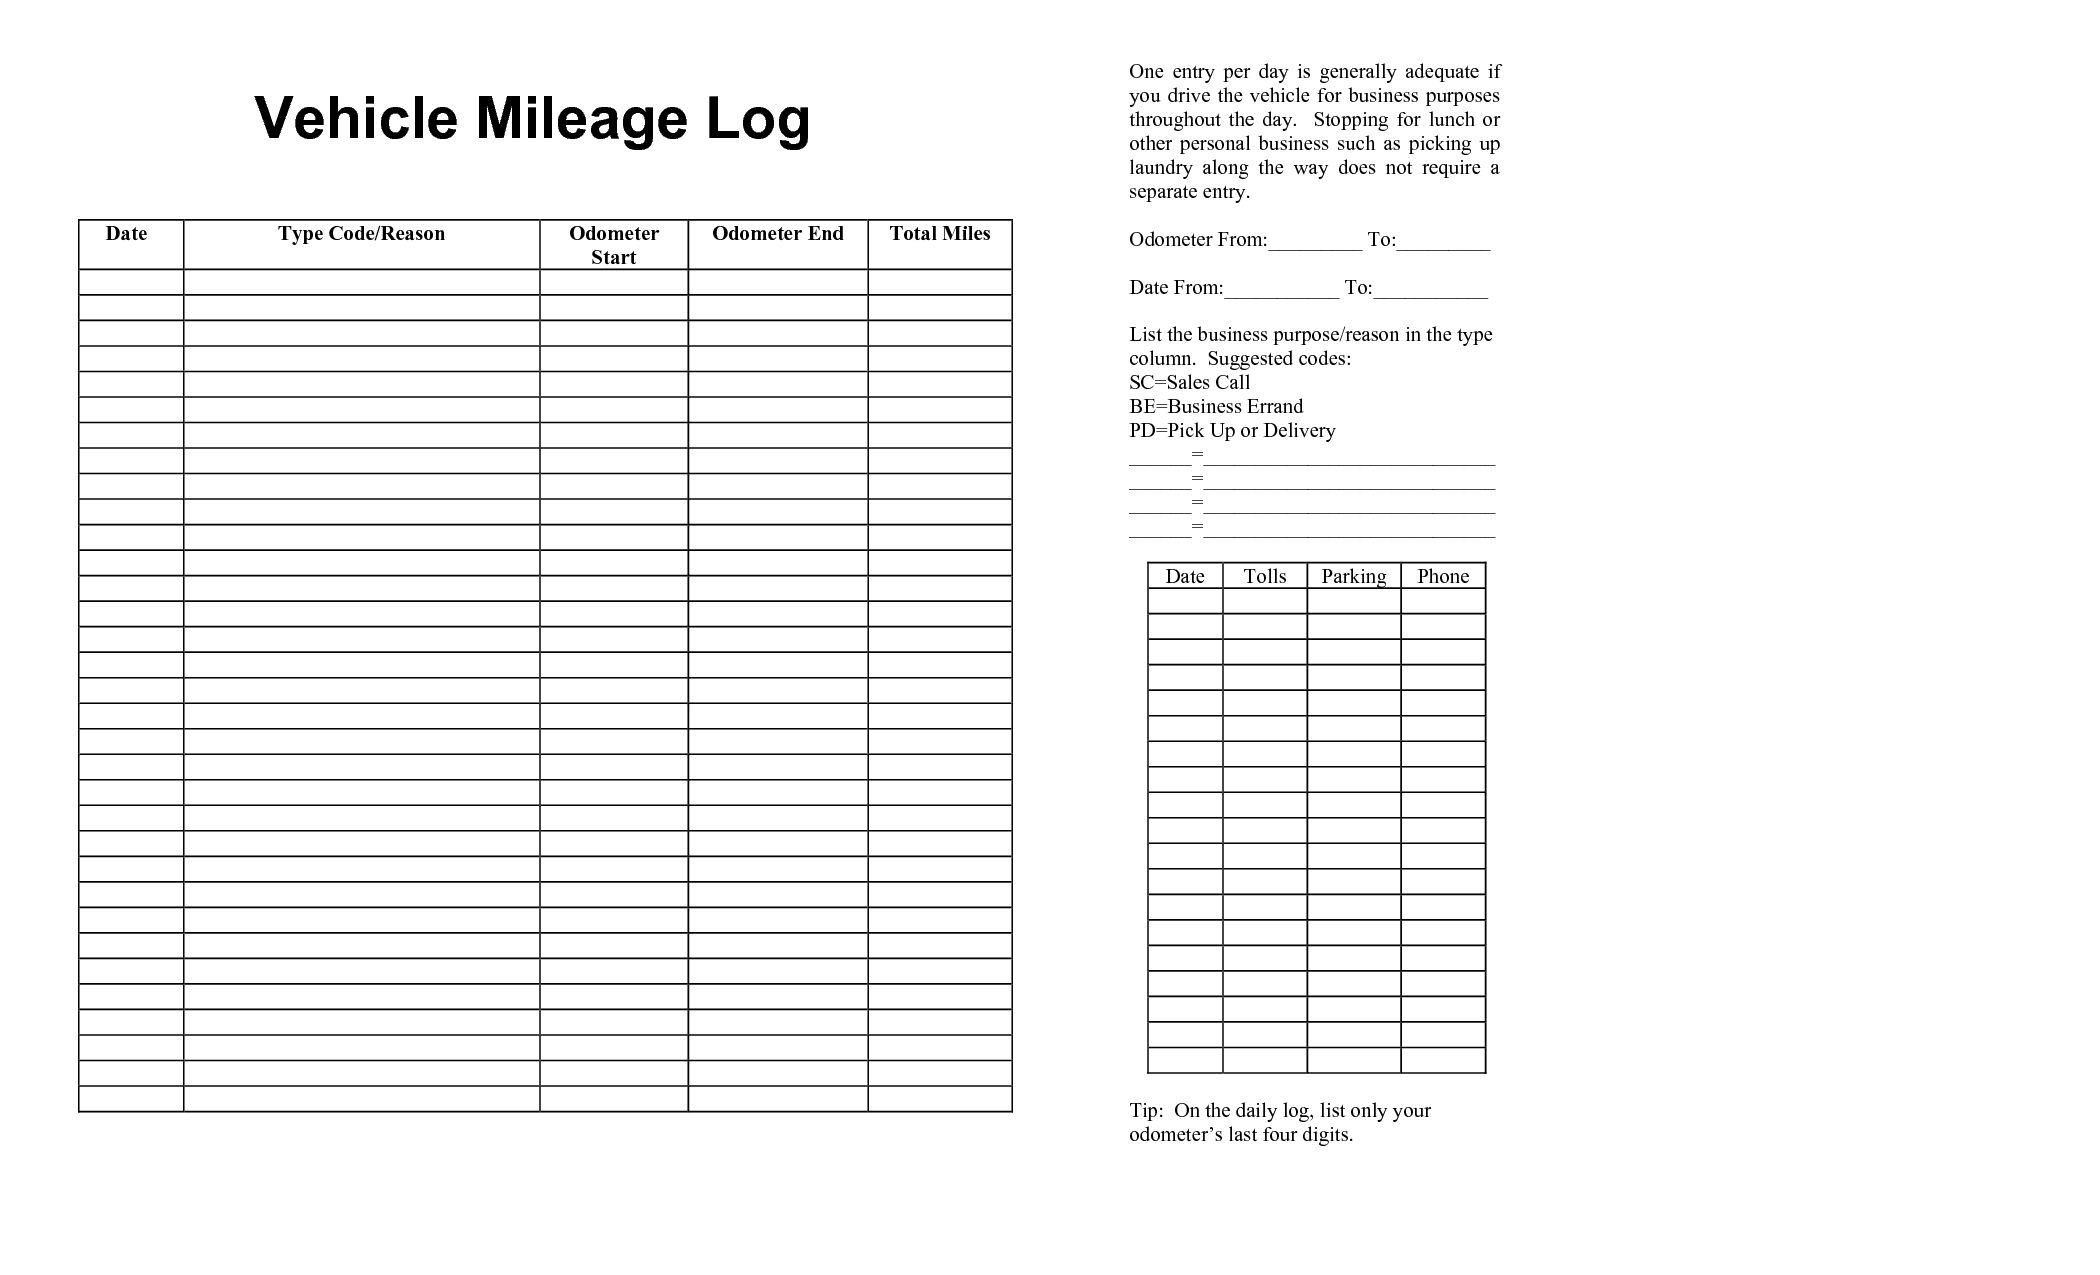 Vehicle Mileage Log Sheet